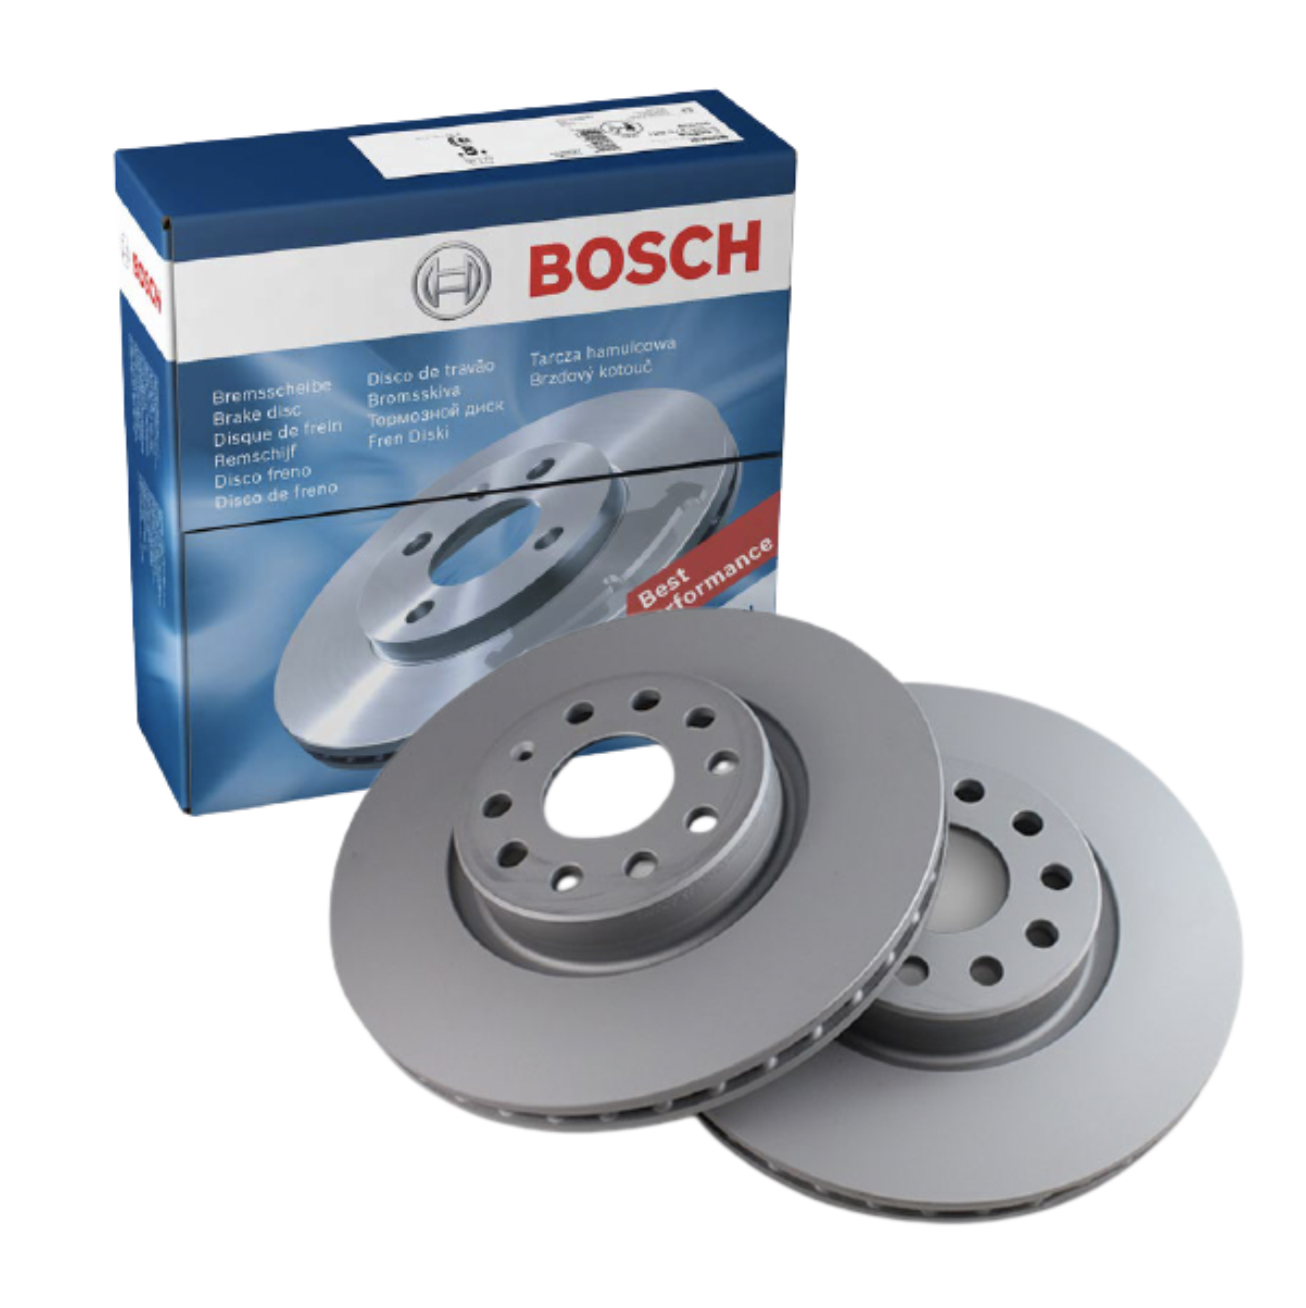 Bosch Front Brake Disc Rotors 312mm BD997